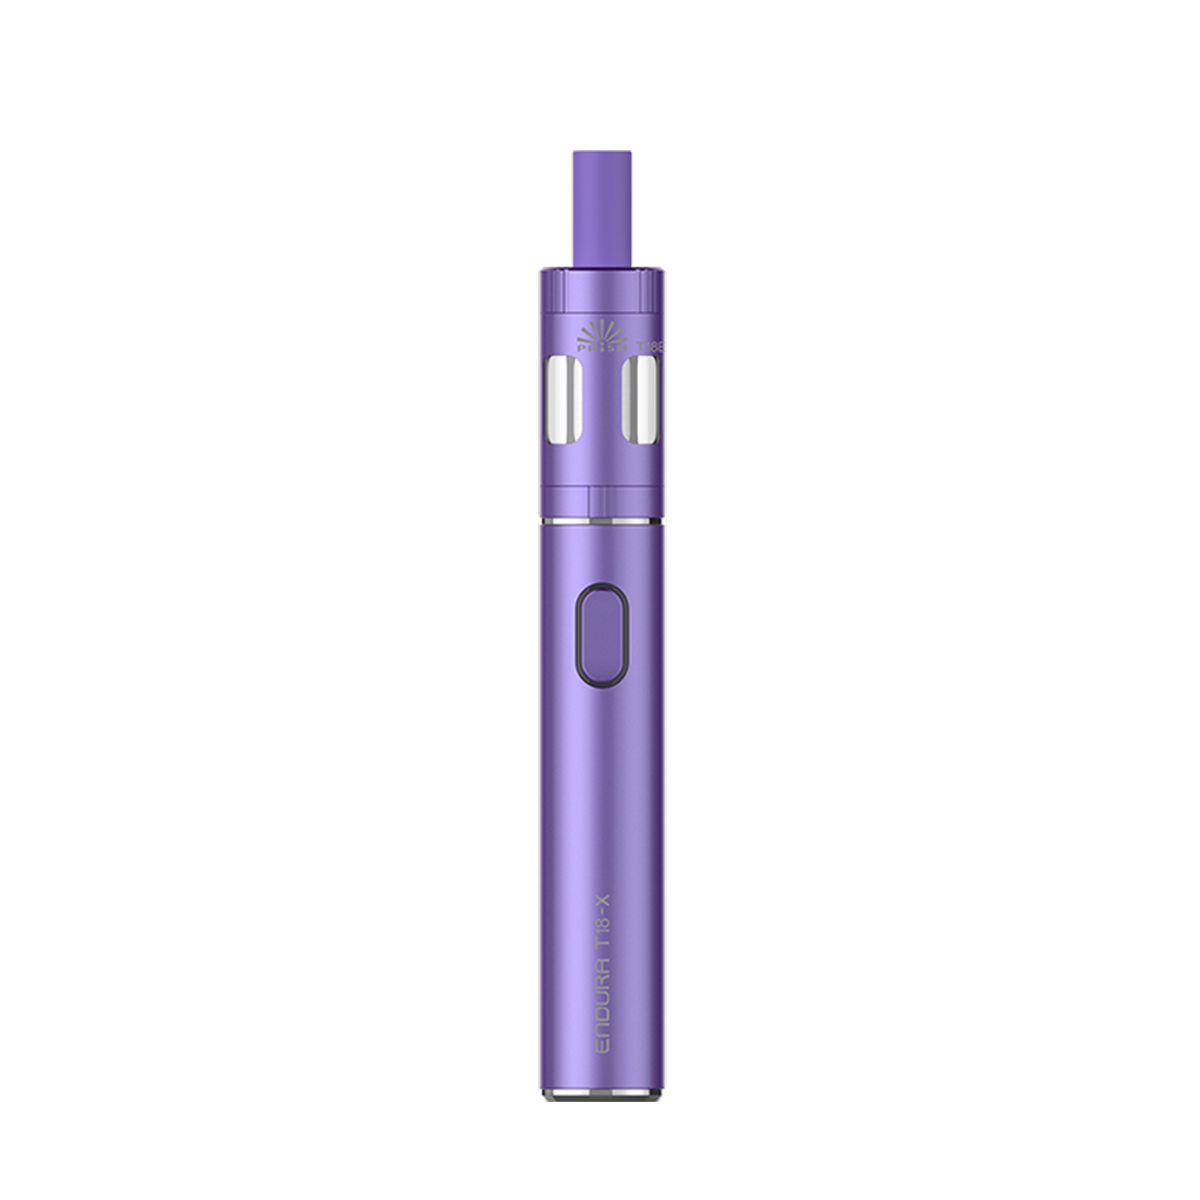 Innokin Endura T18X Vape Pen Kit Purpel  